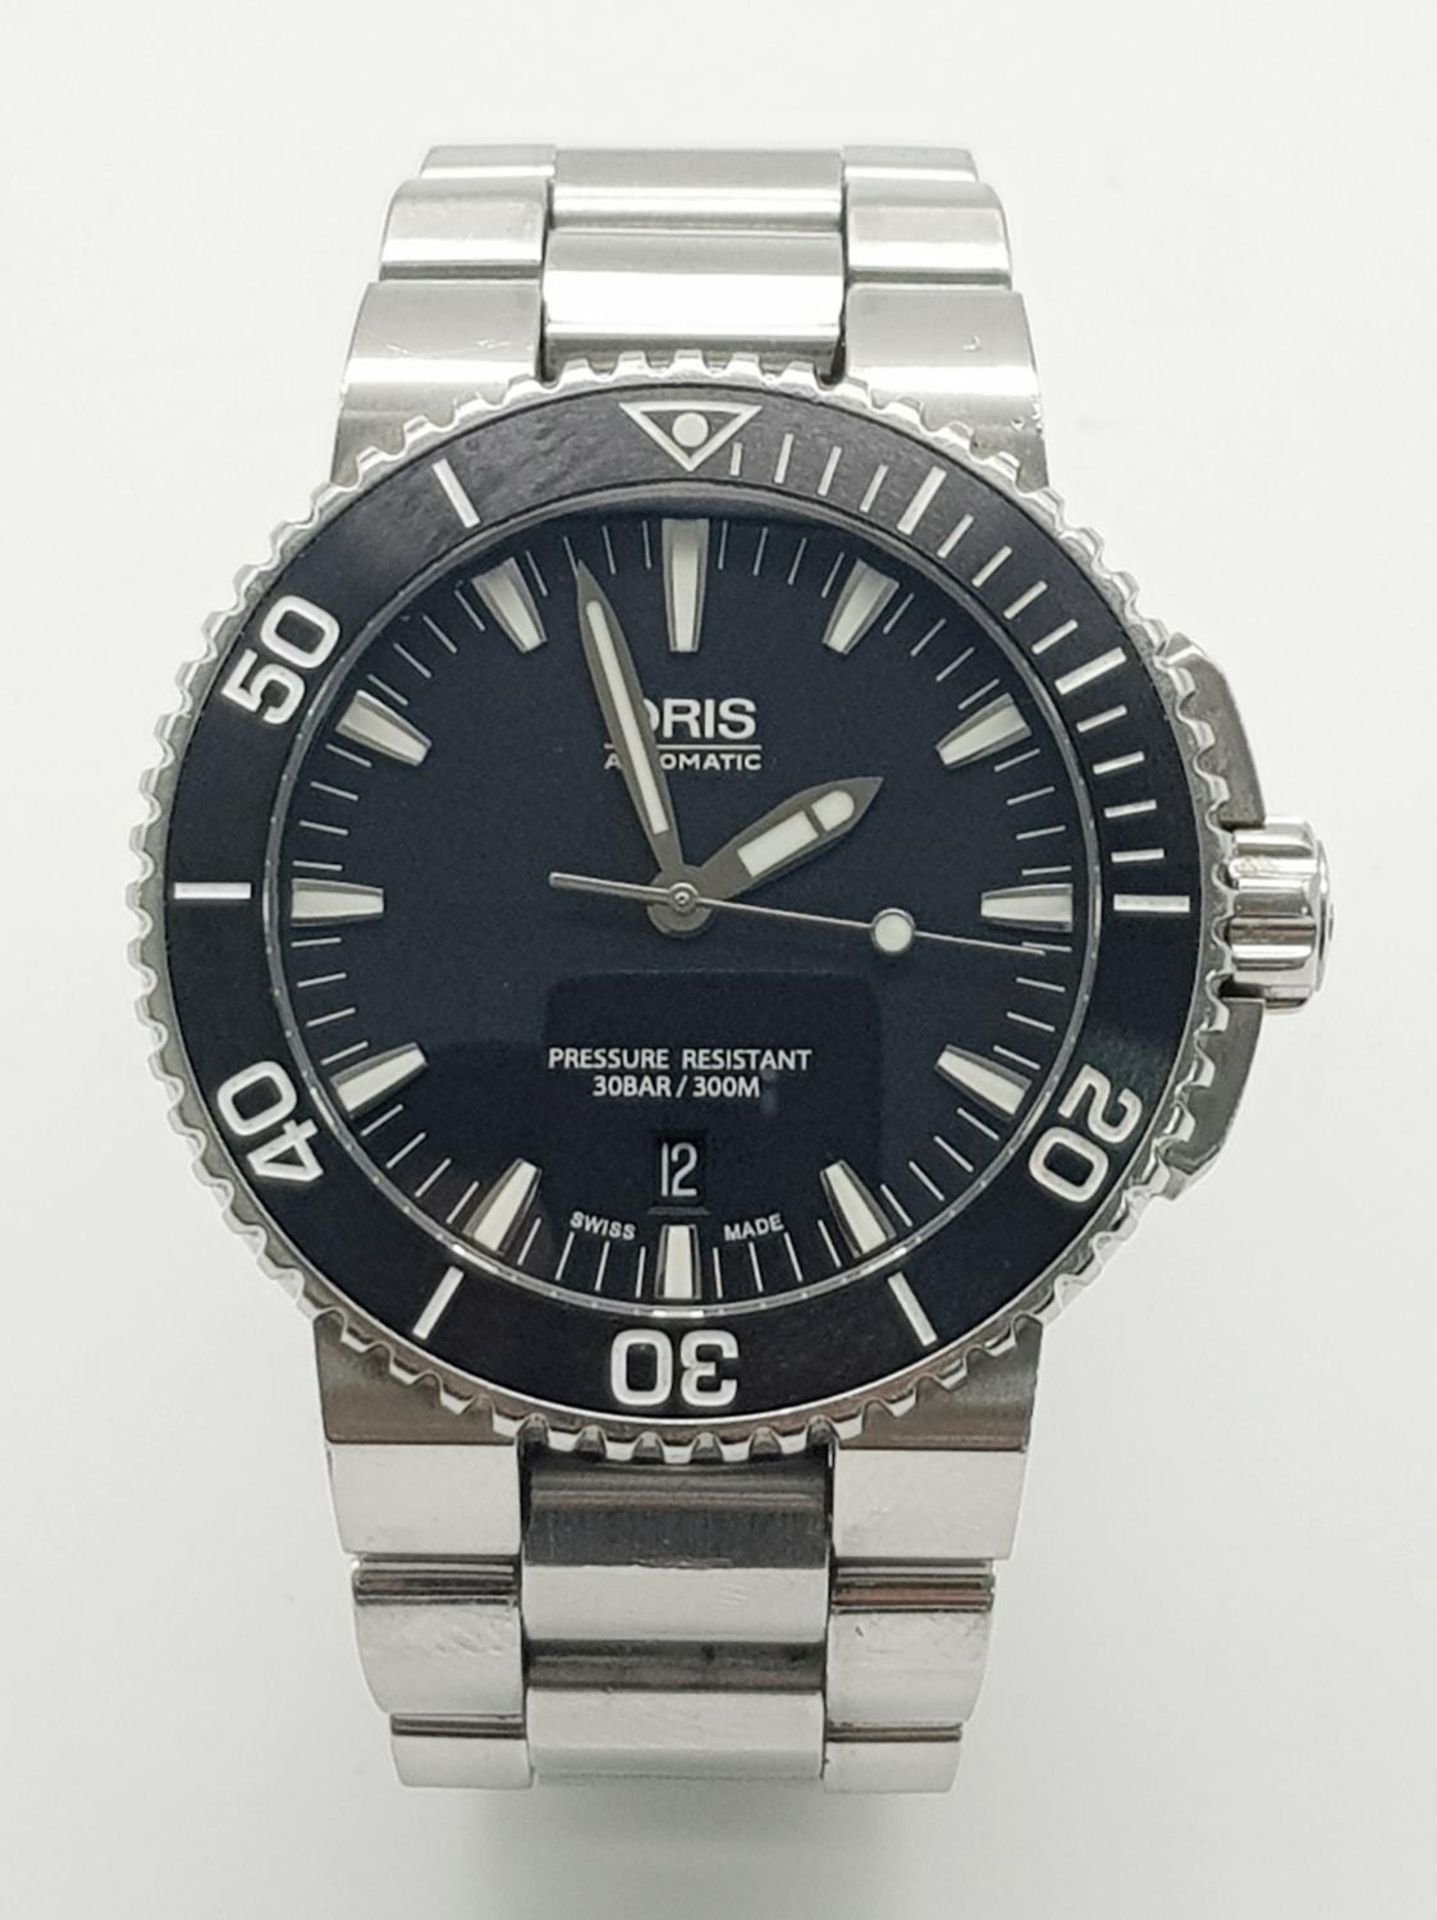 An Oris Automatic Divers Watch. Pressure resistant to 300M - Model 7653. Stainless steel bracelet - Bild 2 aus 8